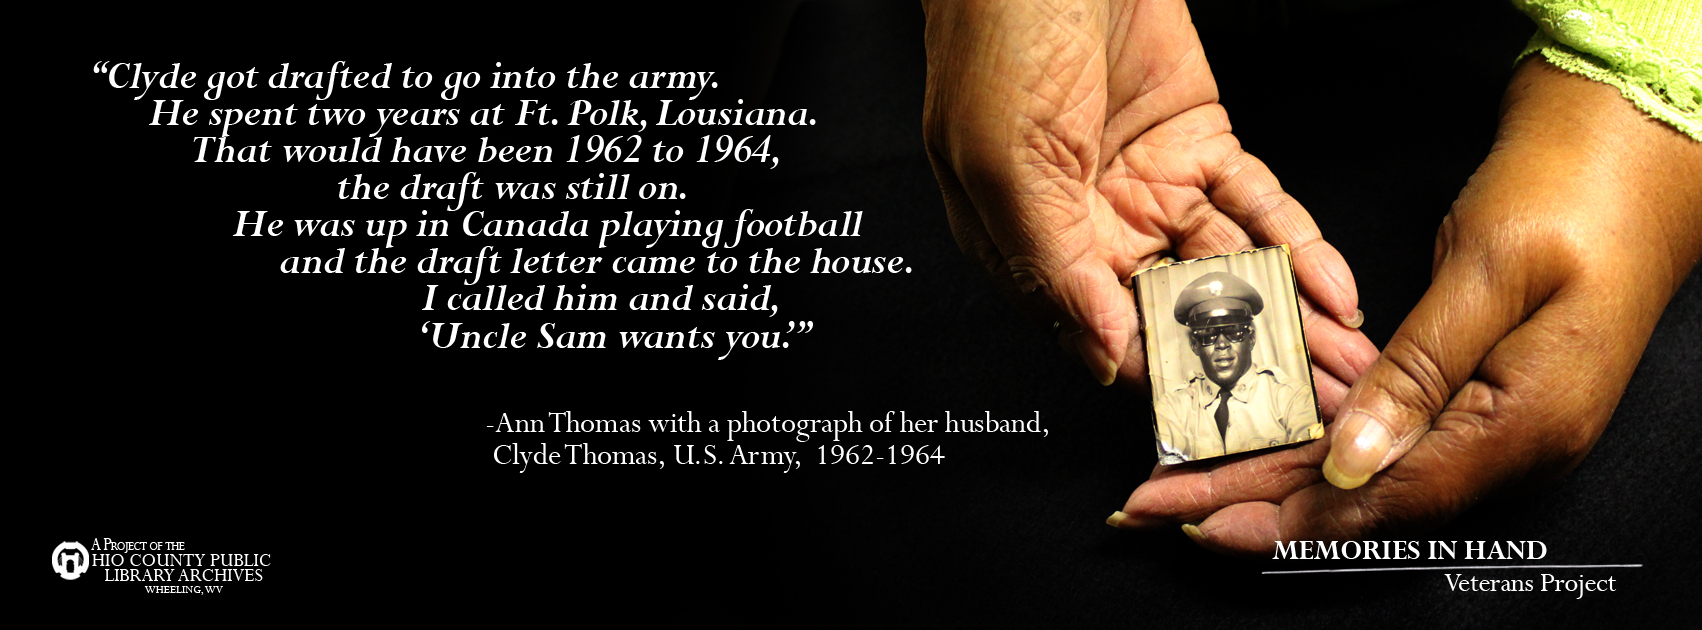 Clyde Thomas, U.S. Army, 1962-1964